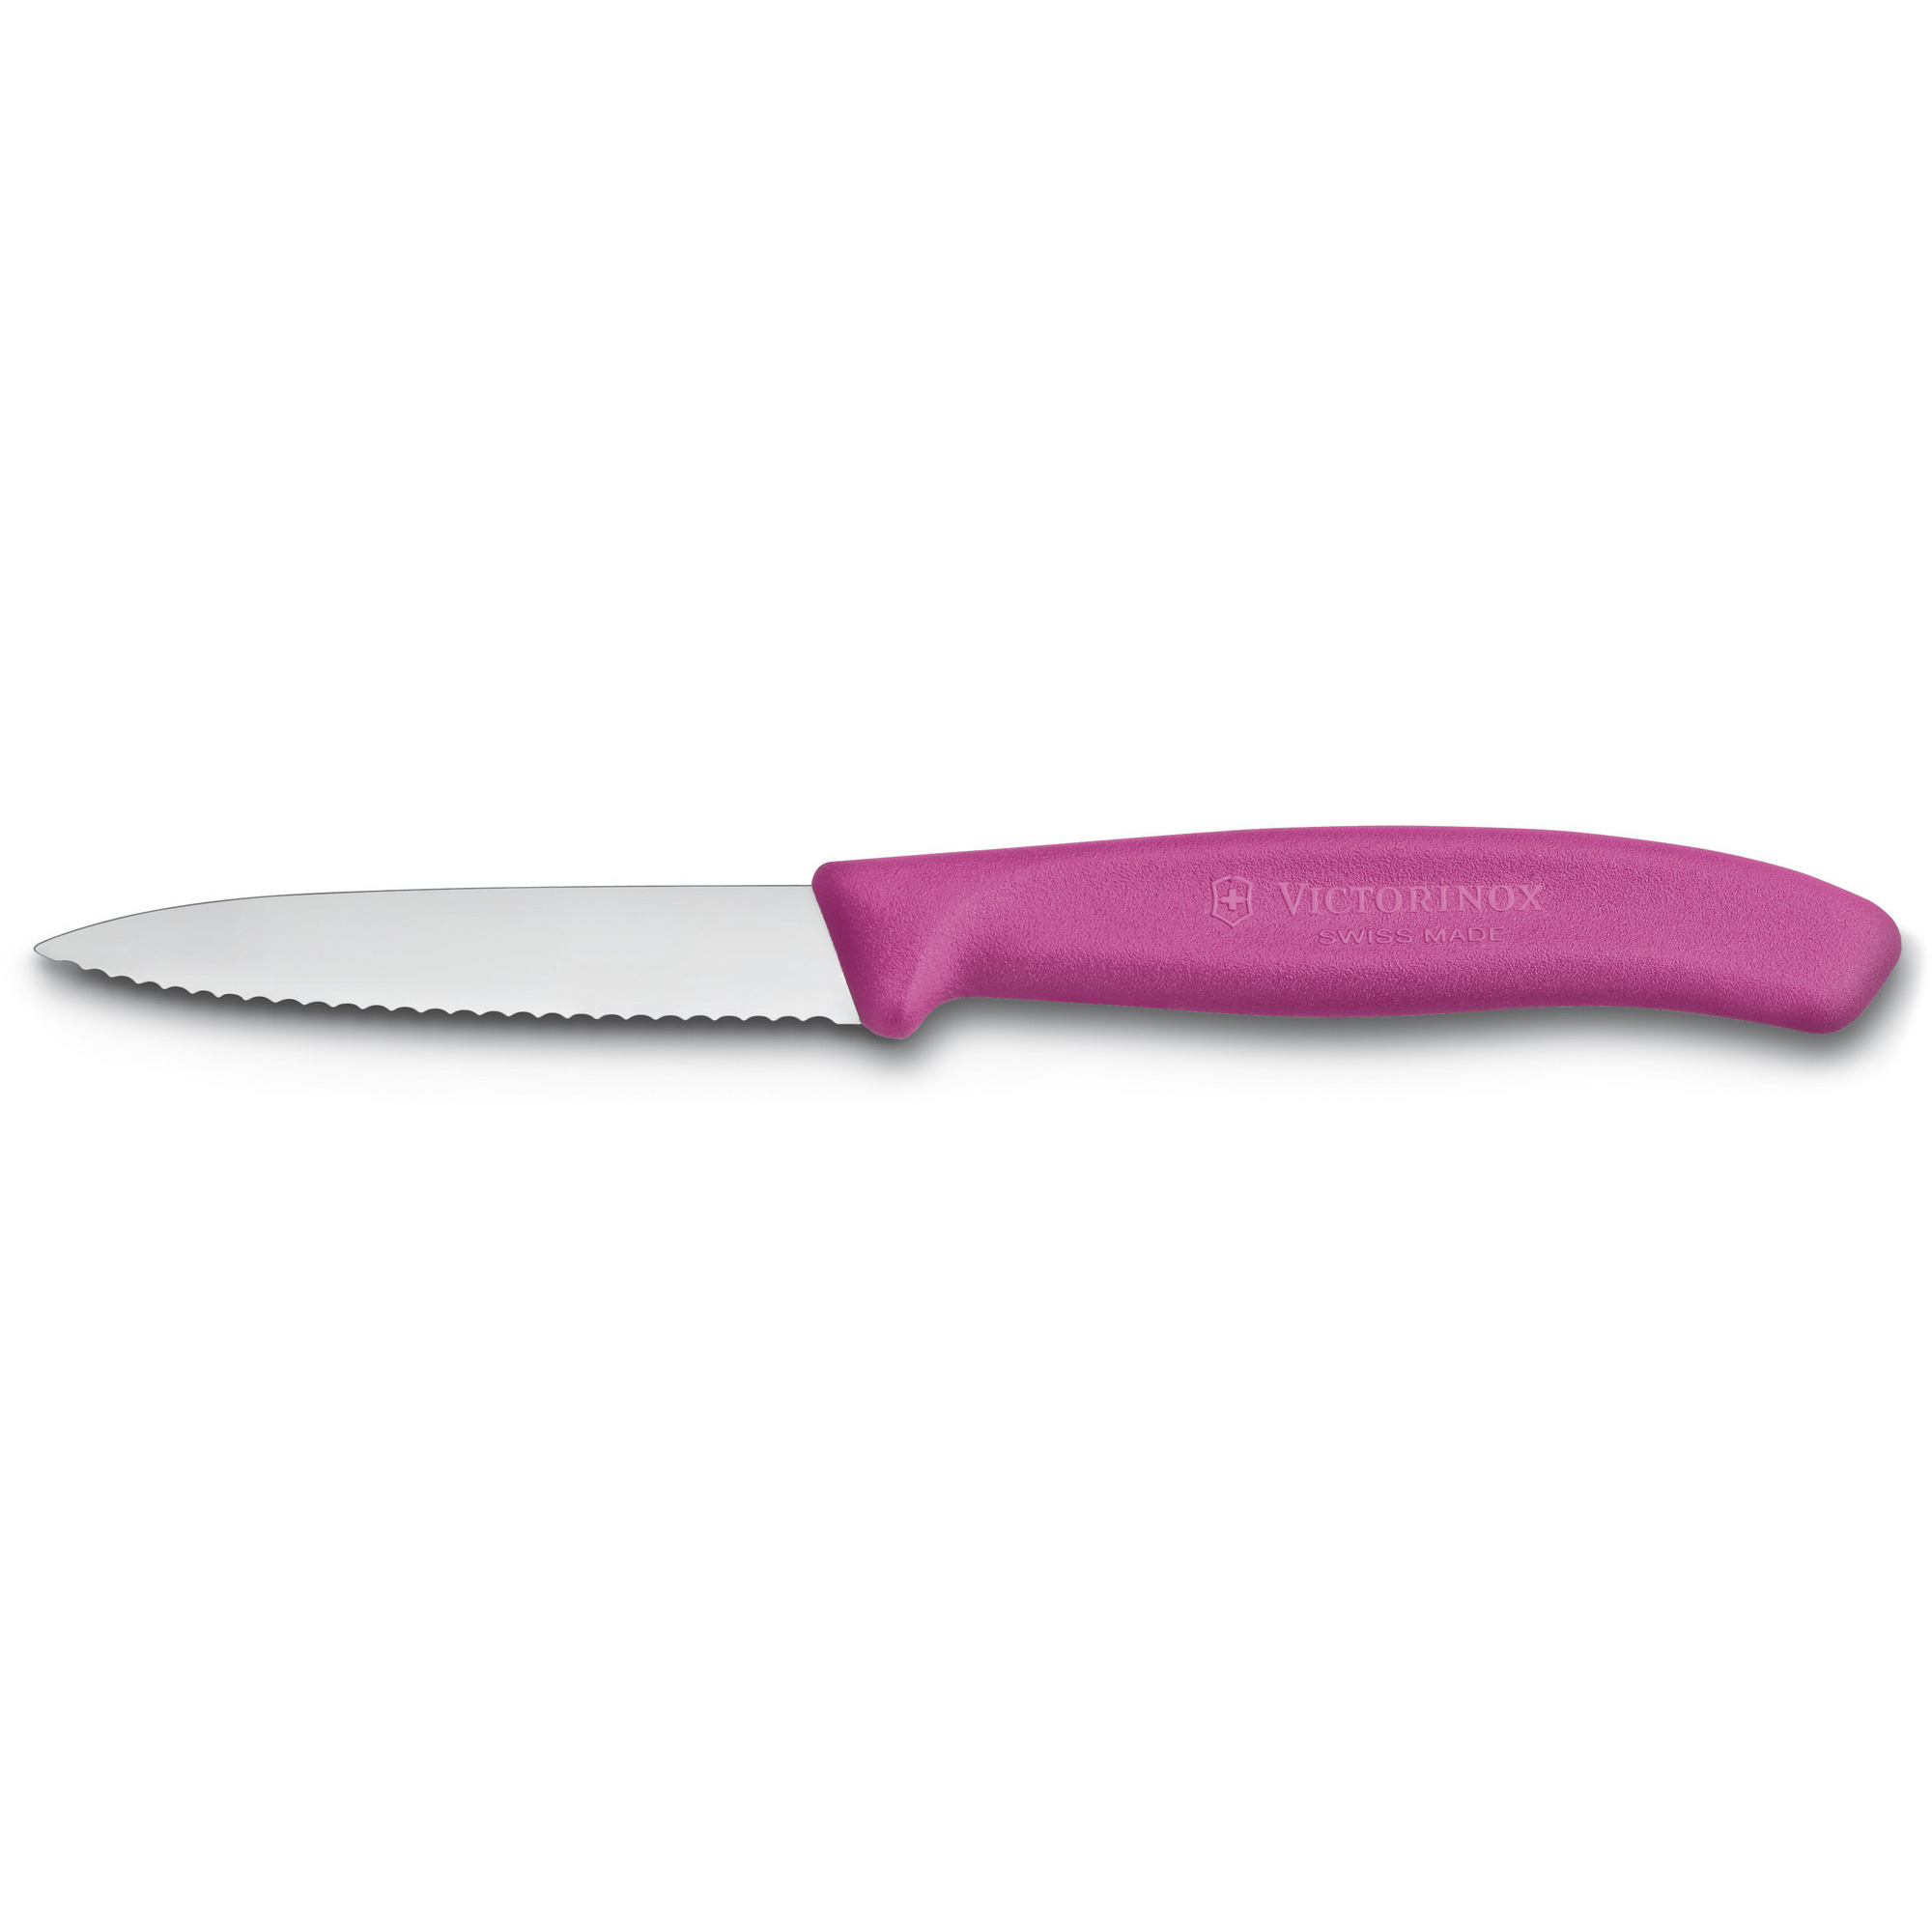 Victorinox Takket urtekniv med nylonskæfte, 8 cm., lyserød